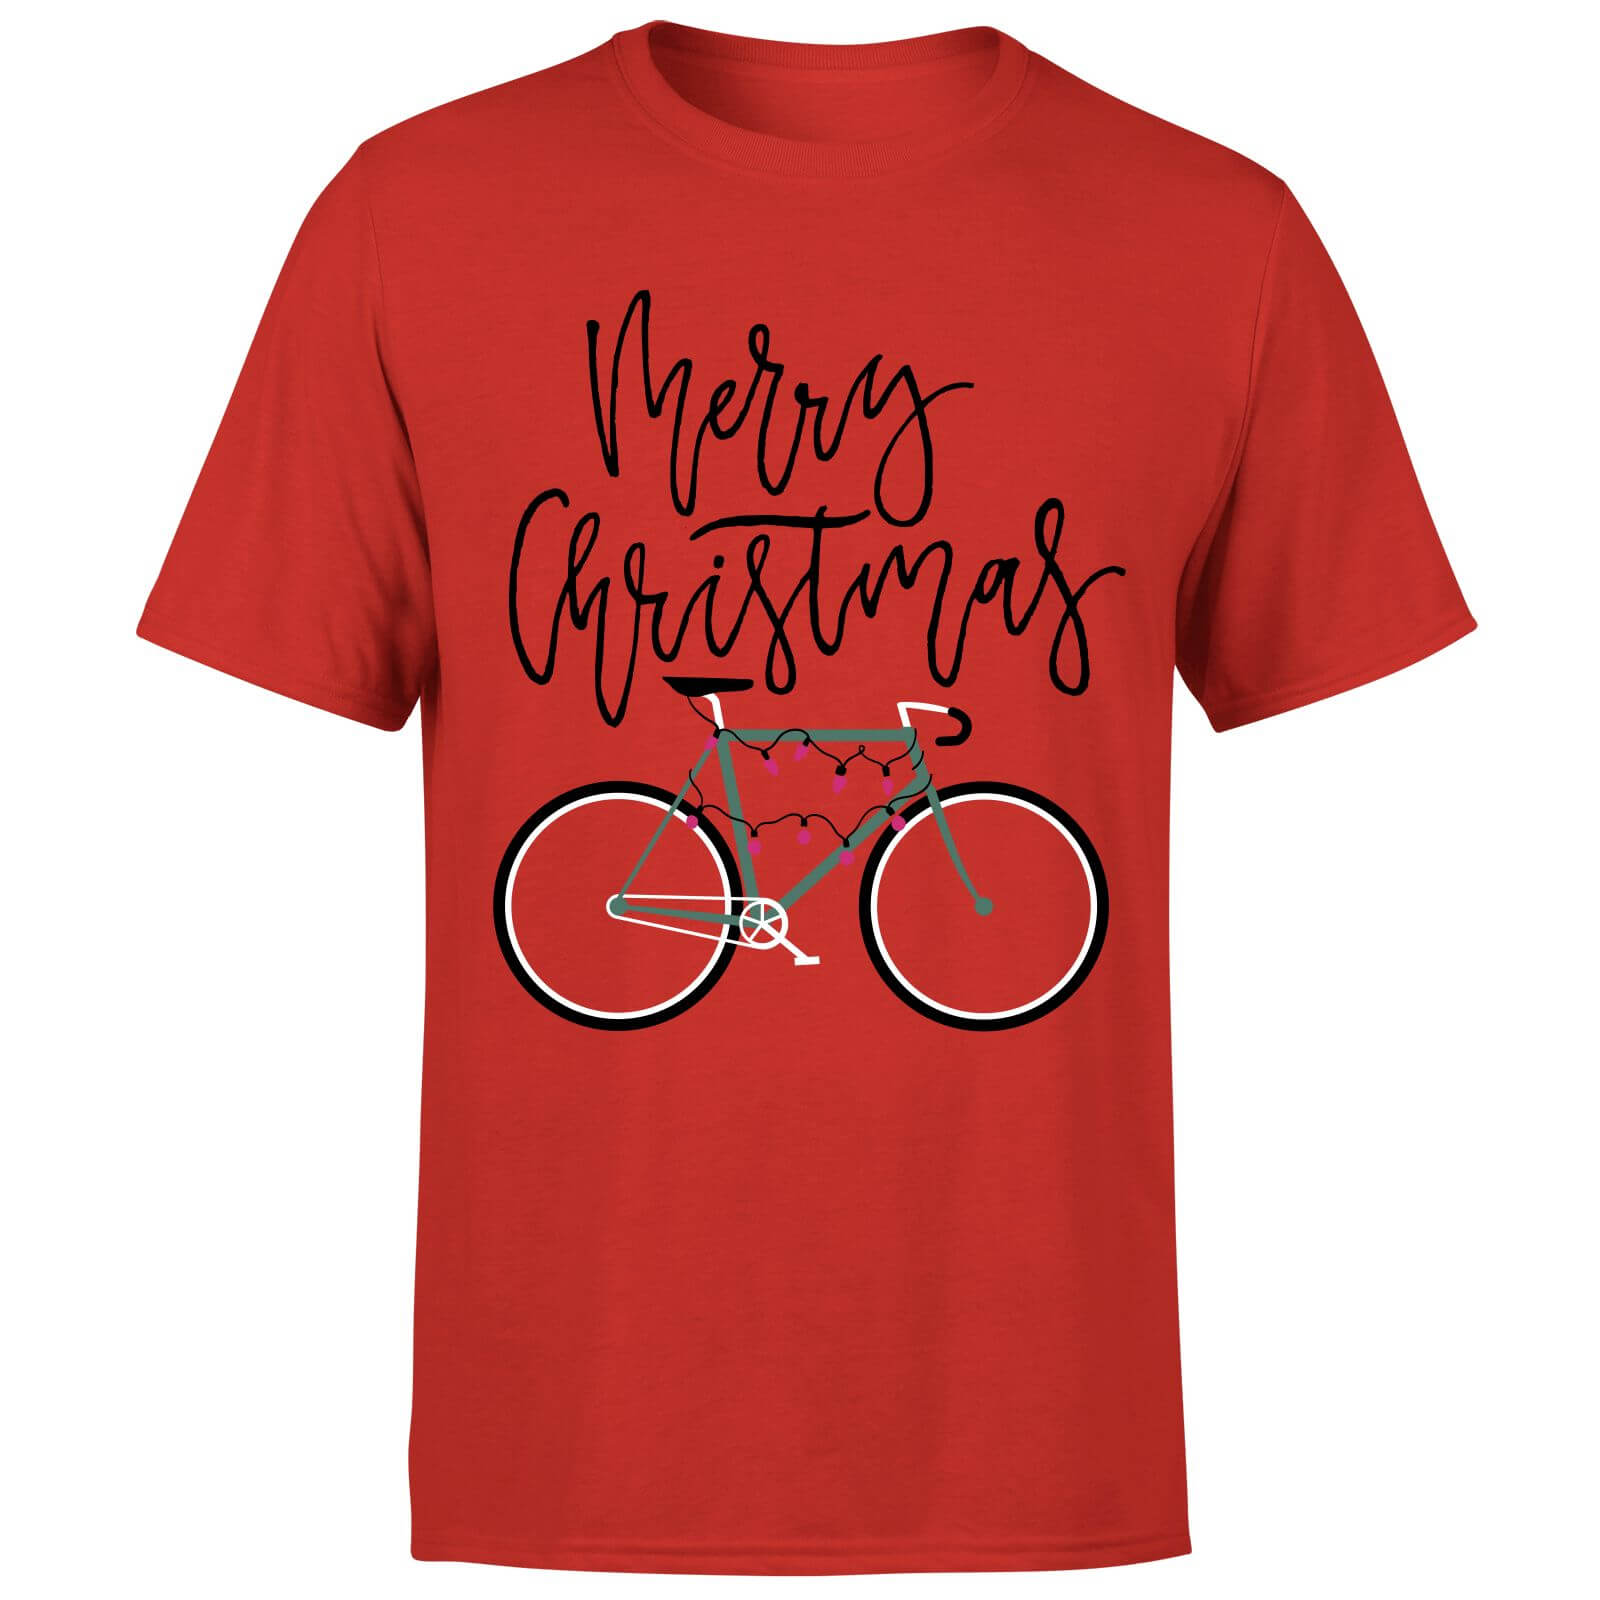 Bike Lights Men's Christmas T-Shirt - Red - L - Red